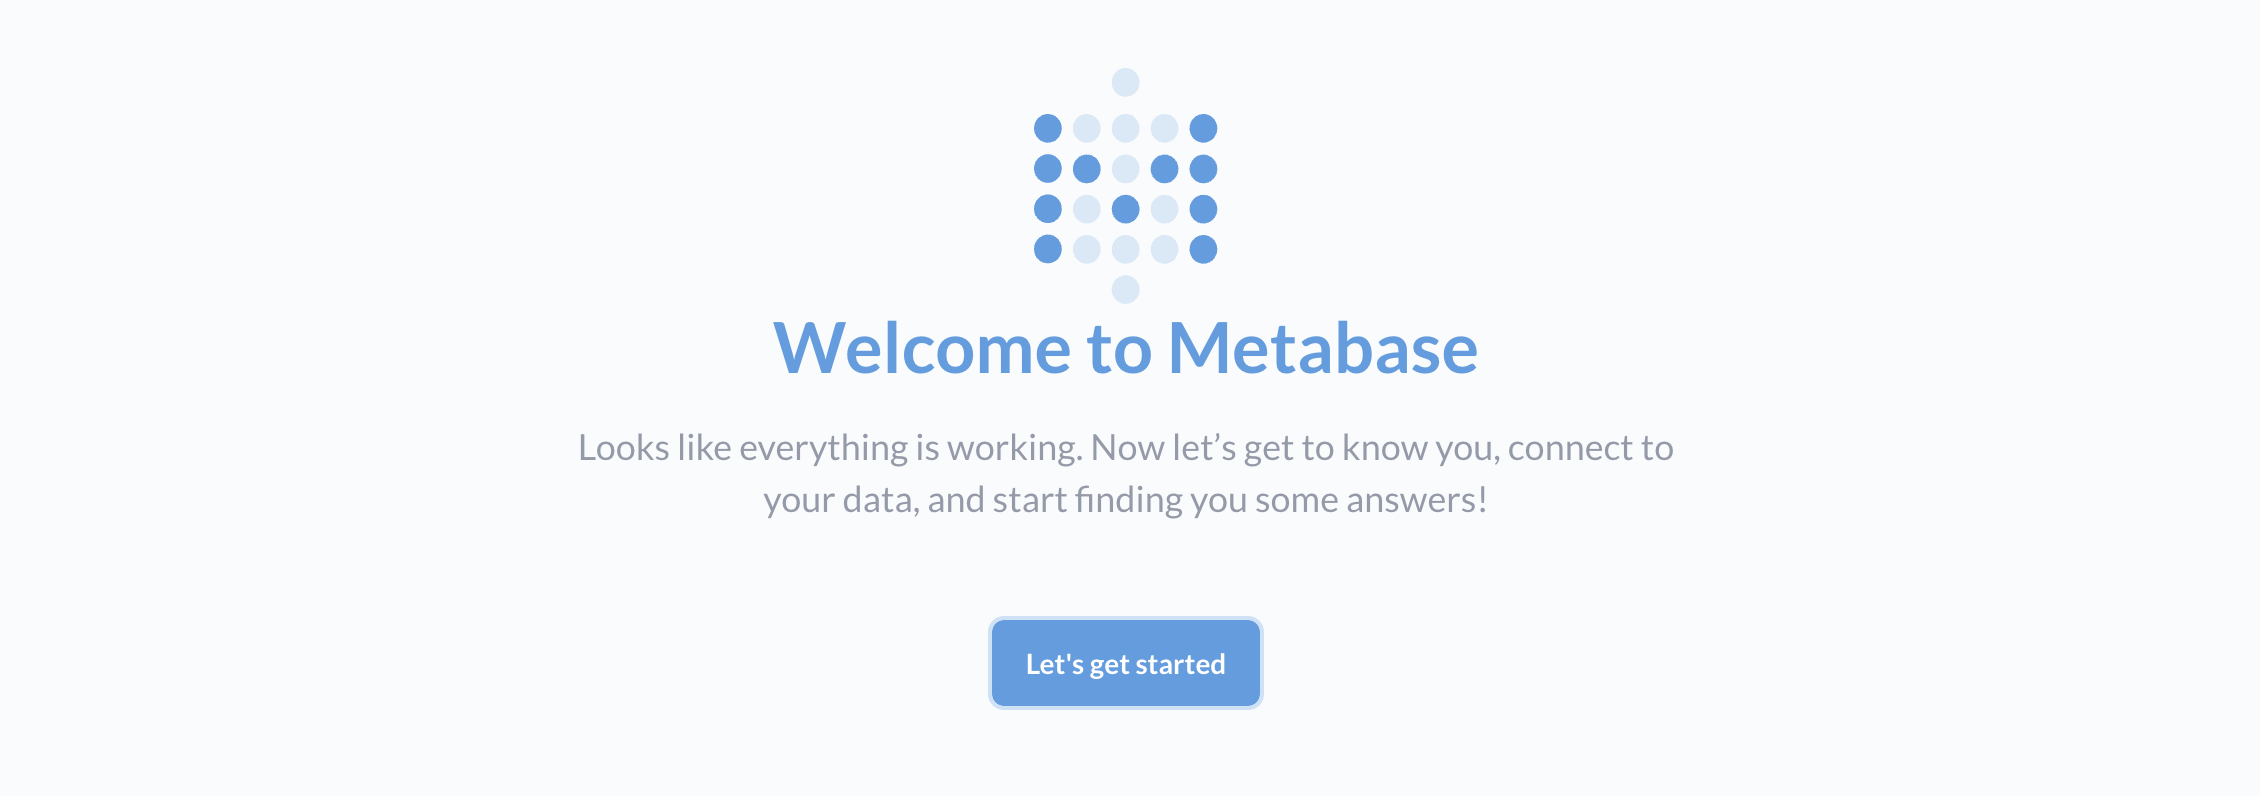 Metabase instance deployed on Railway